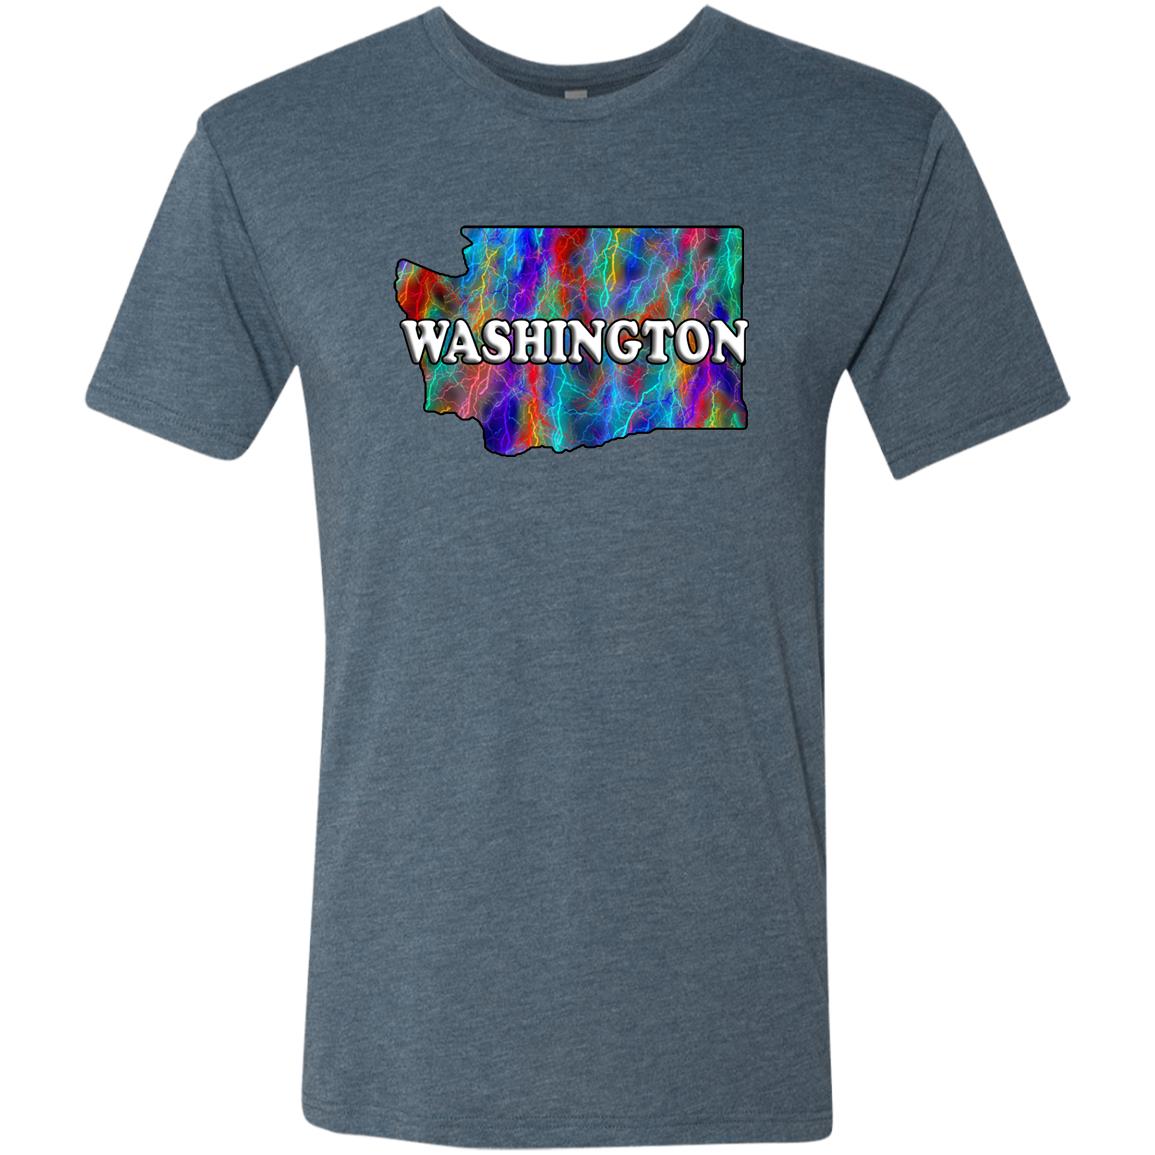 WashingtonT-Shirt